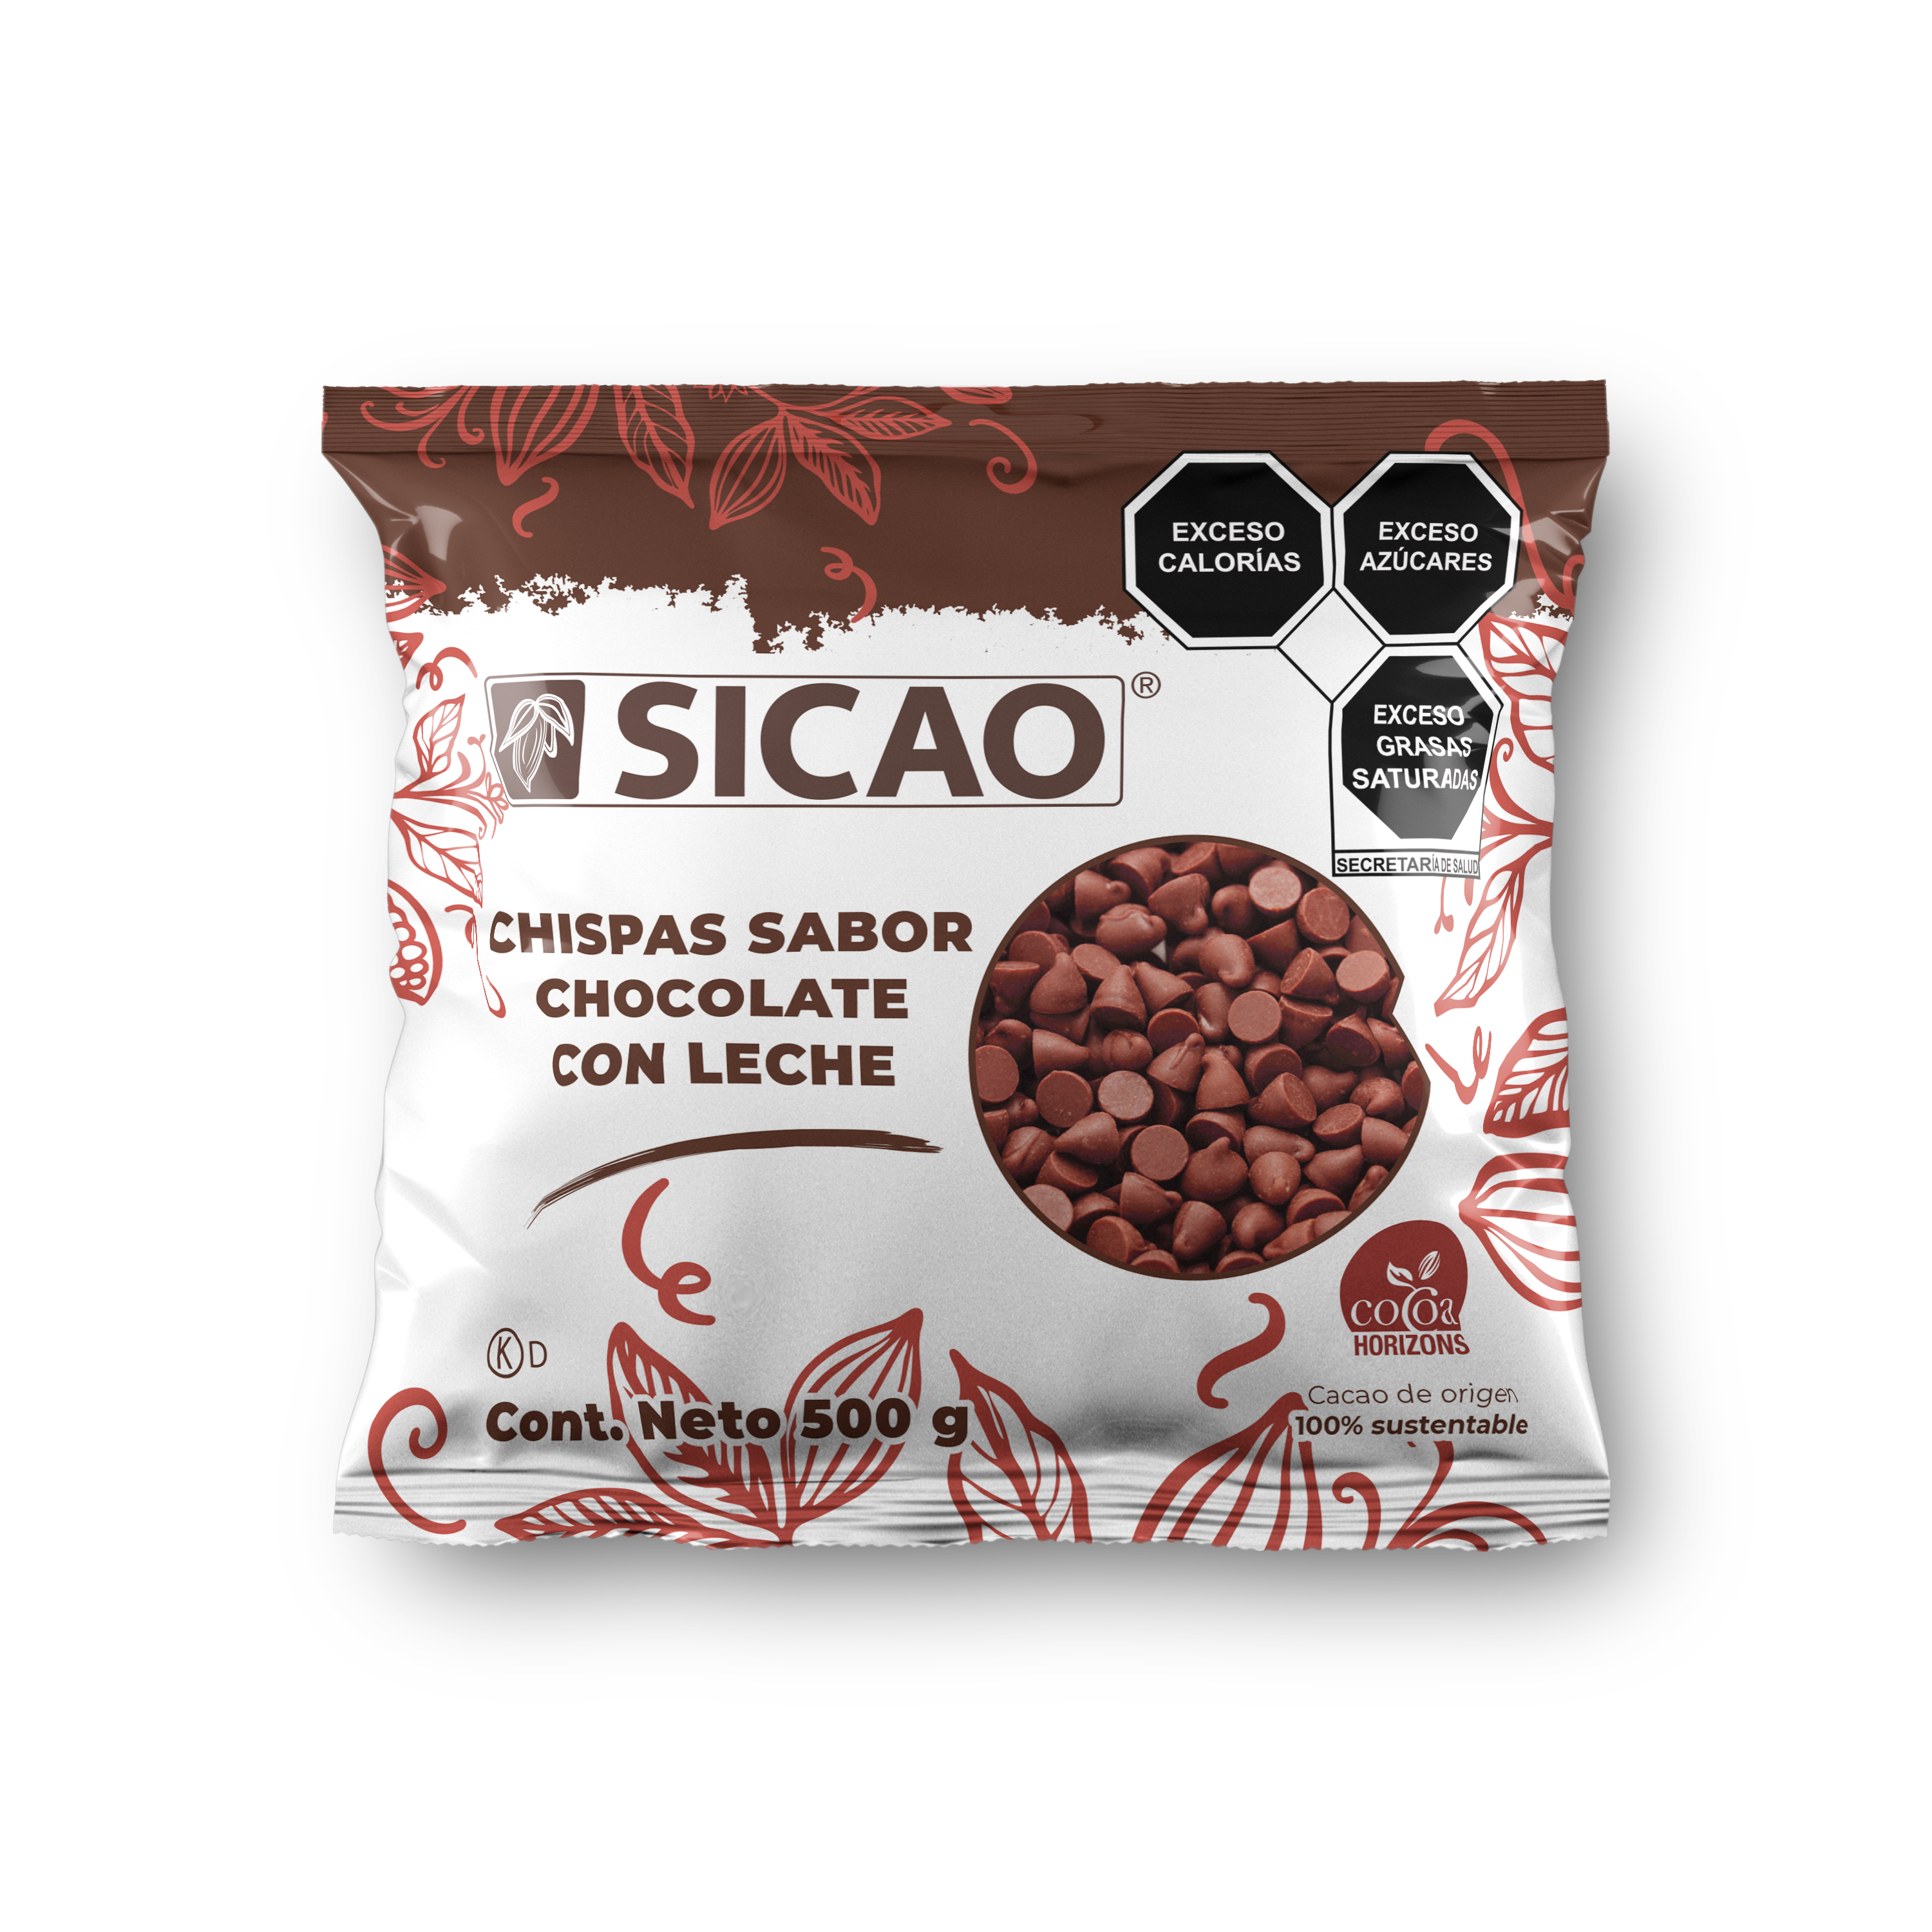 Sucedáneo - Chispas Sabor Chocolate con Leche - Chispas - Bolsa 500 g (1)